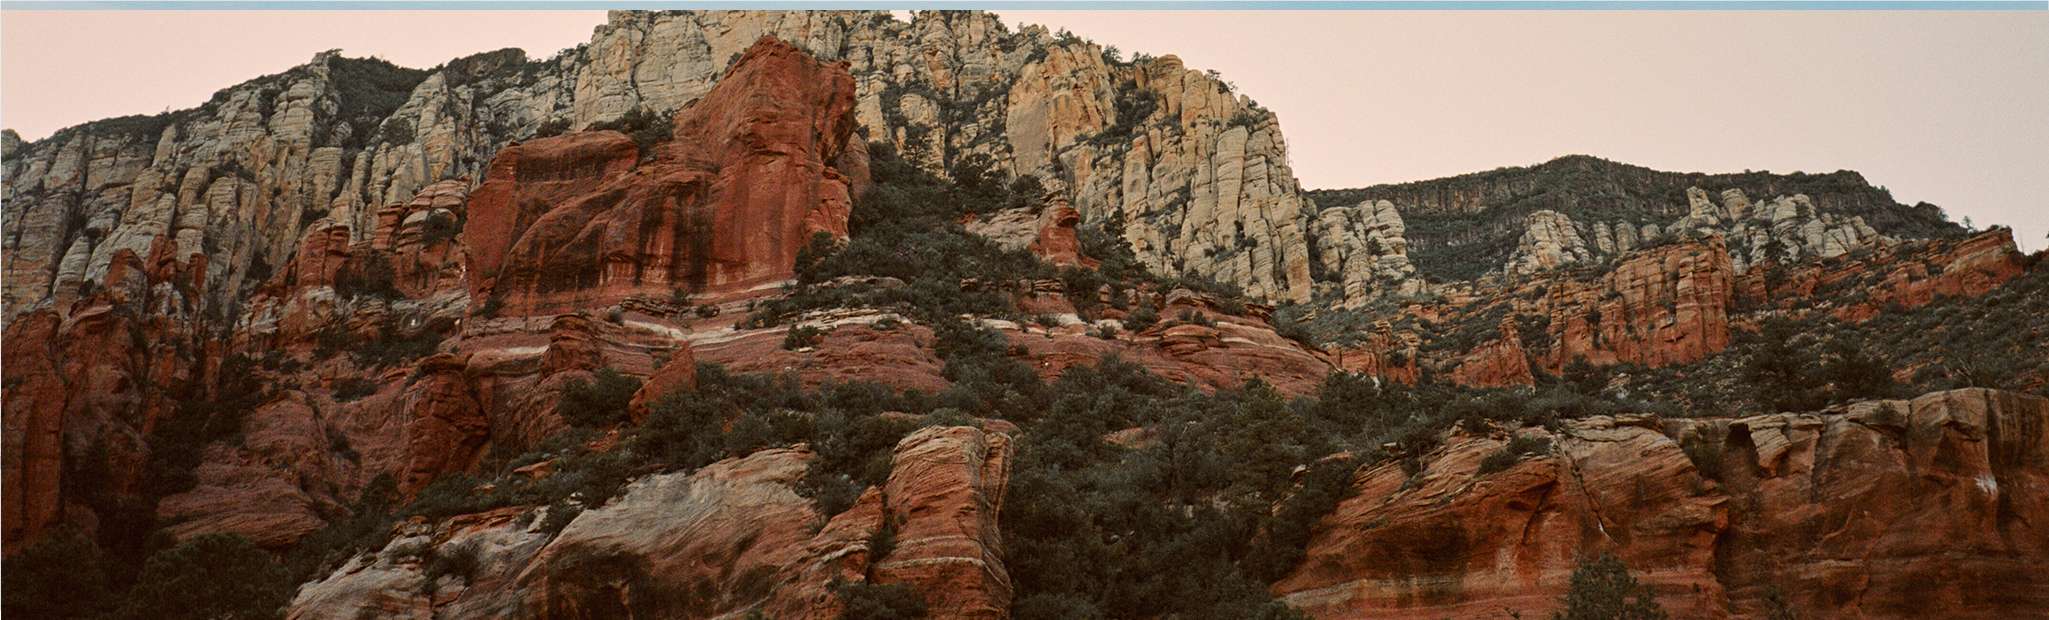 red rocks in sedona arizona